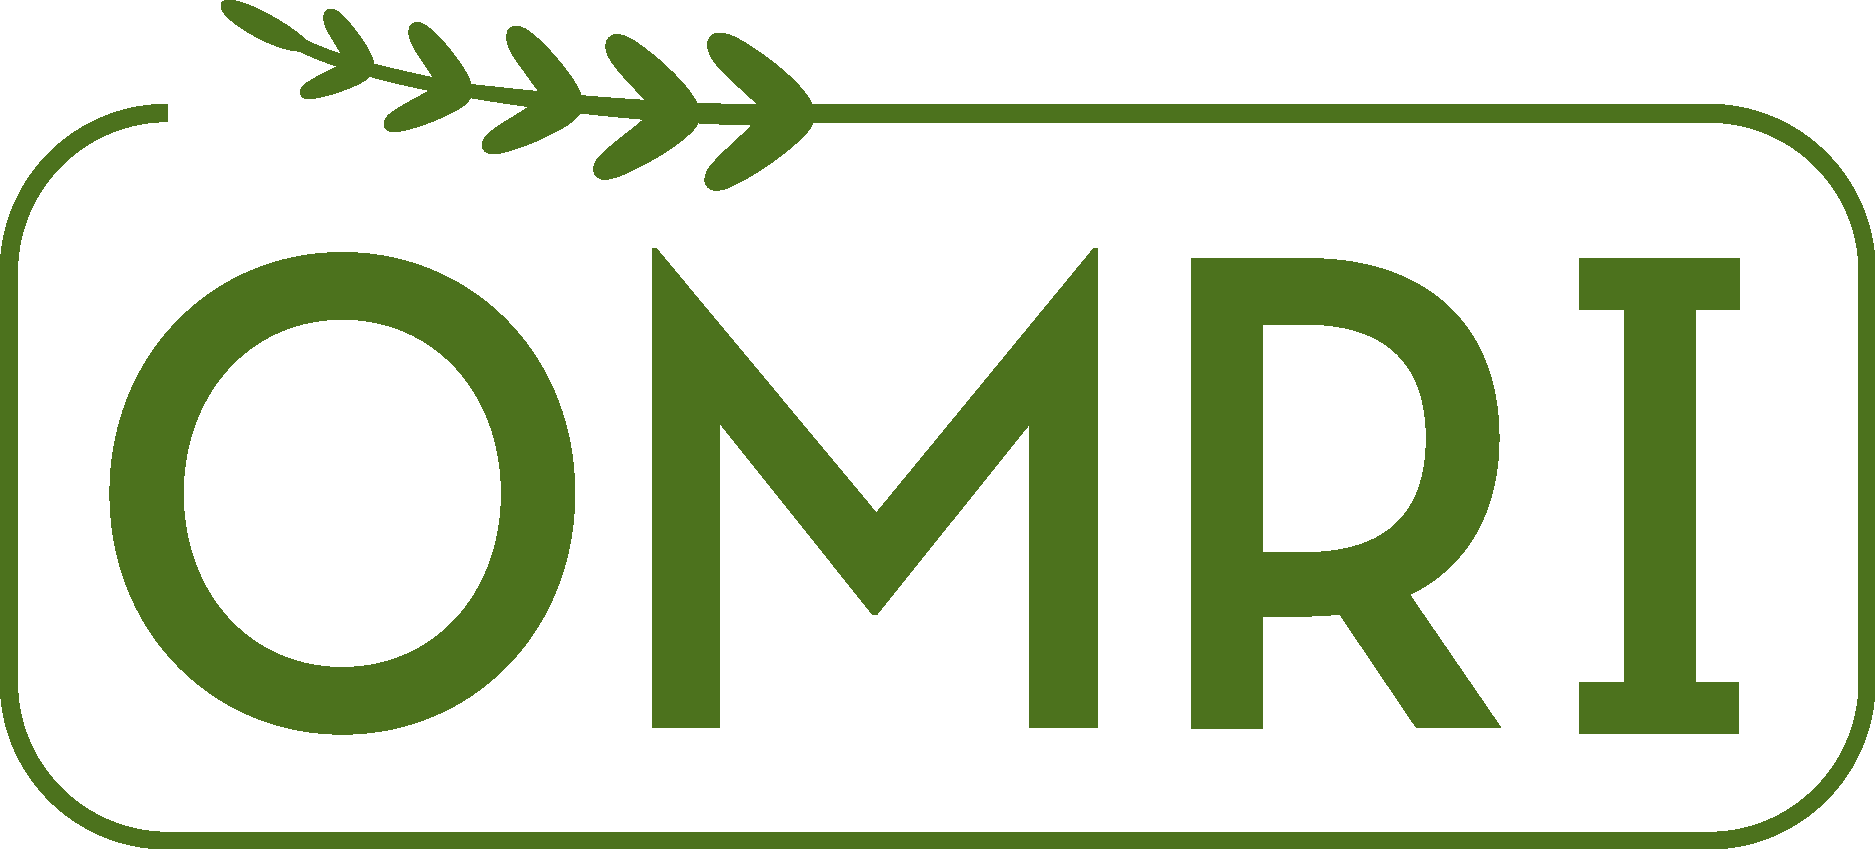 Organic Materials Review Institute Logo Vector